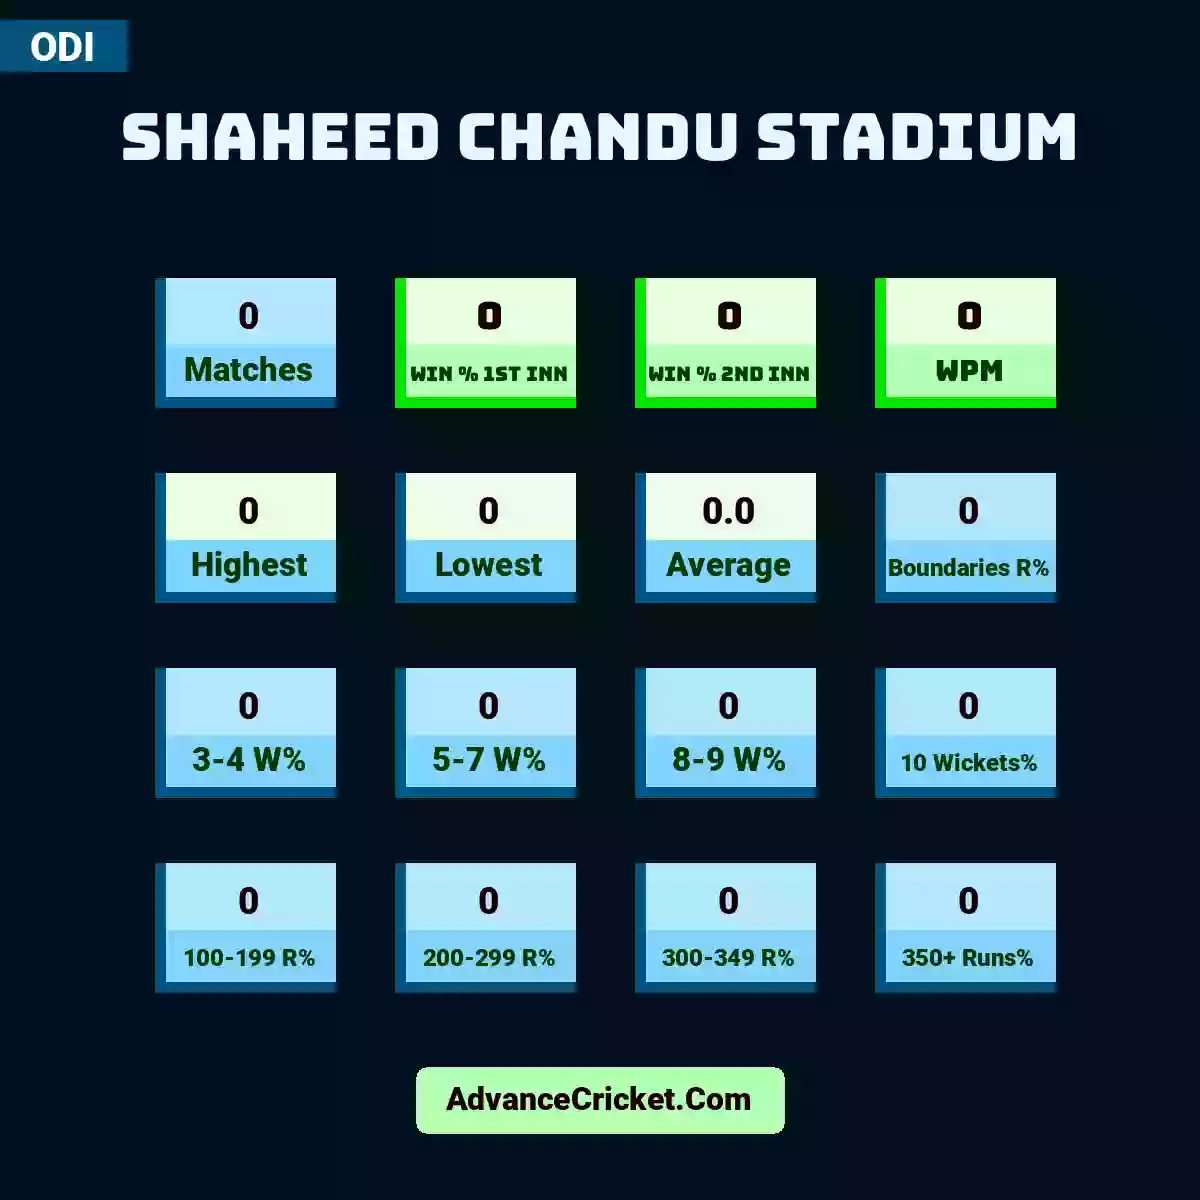 Image showing Shaheed Chandu Stadium with Matches: 0, Win % 1st Inn: 0, Win % 2nd Inn: 0, WPM: 0, Highest: 0, Lowest: 0, Average: 0.0, Boundaries R%: 0, 3-4 W%: 0, 5-7 W%: 0, 8-9 W%: 0, 10 Wickets%: 0, 100-199 R%: 0, 200-299 R%: 0, 300-349 R%: 0, 350+ Runs%: 0.